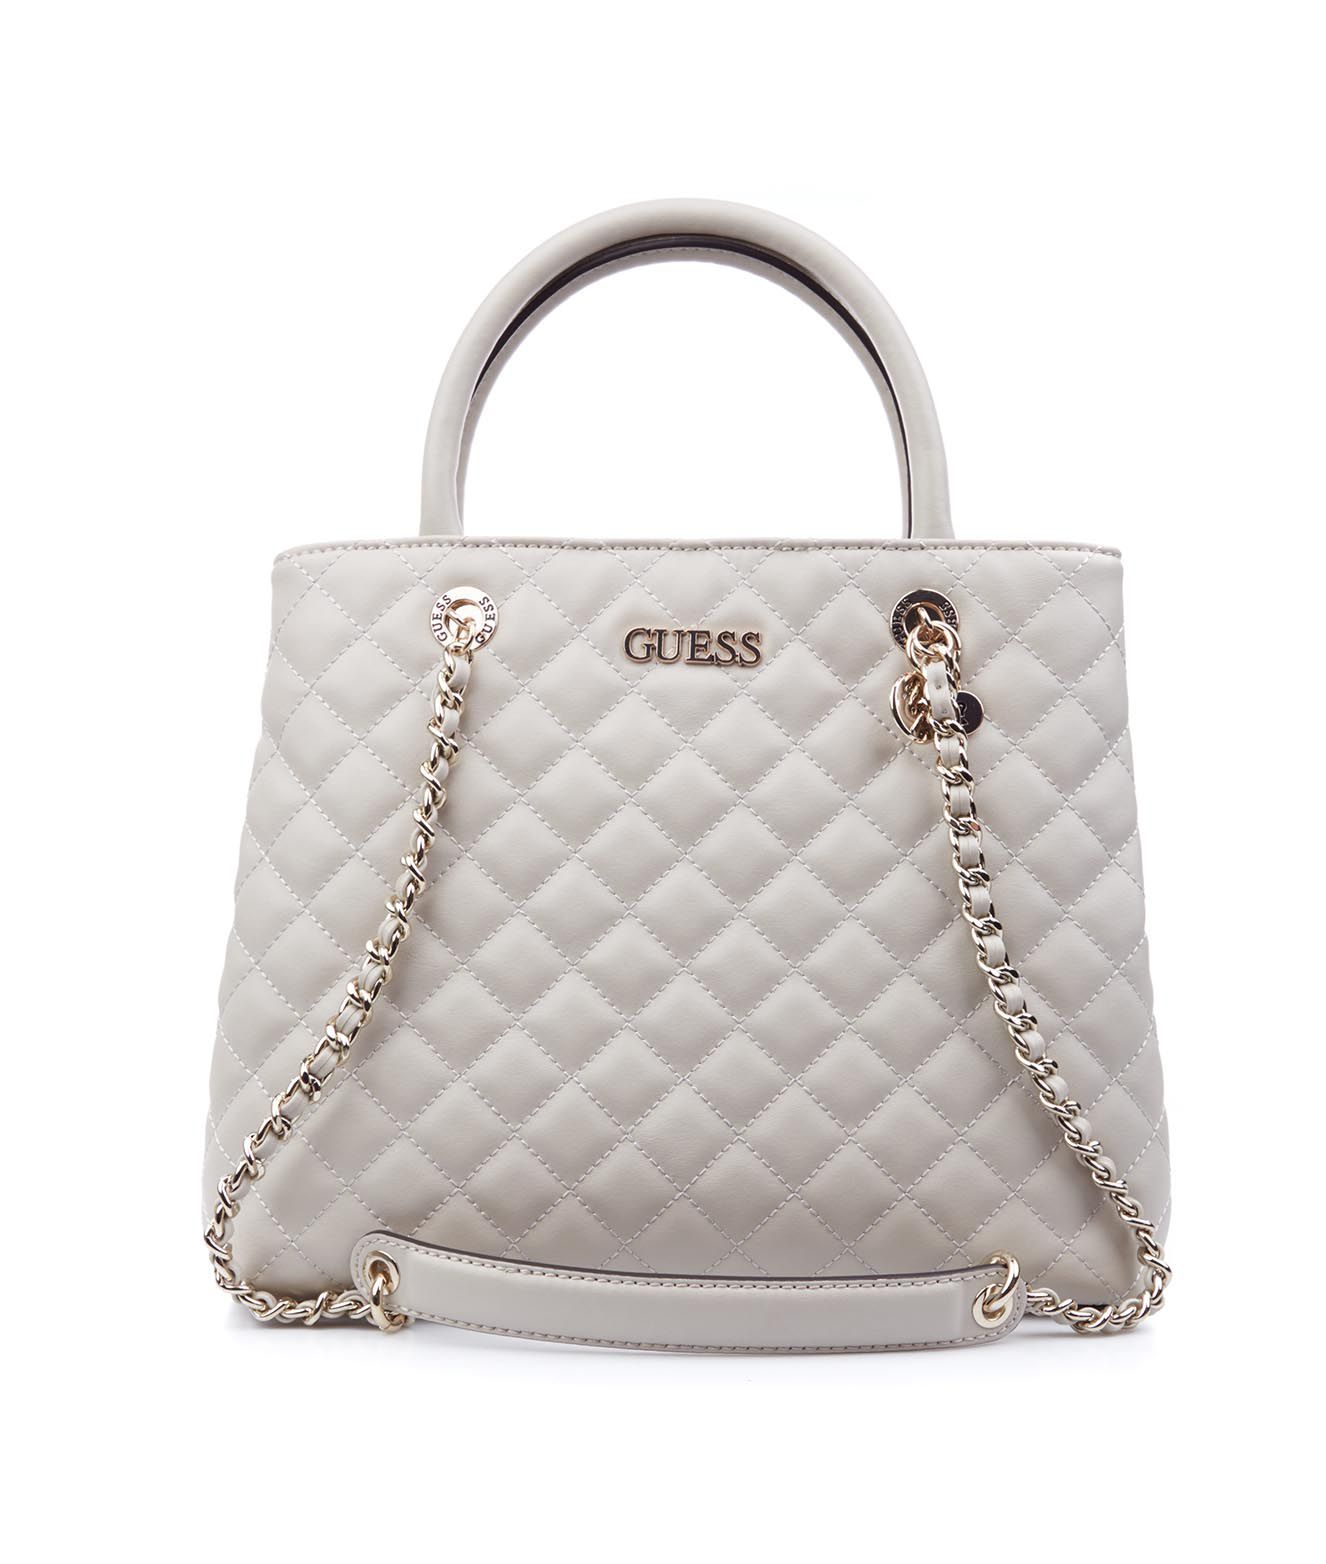 GUESS Women's Bags Handbag Grey Leather NIB Authentic | eBay